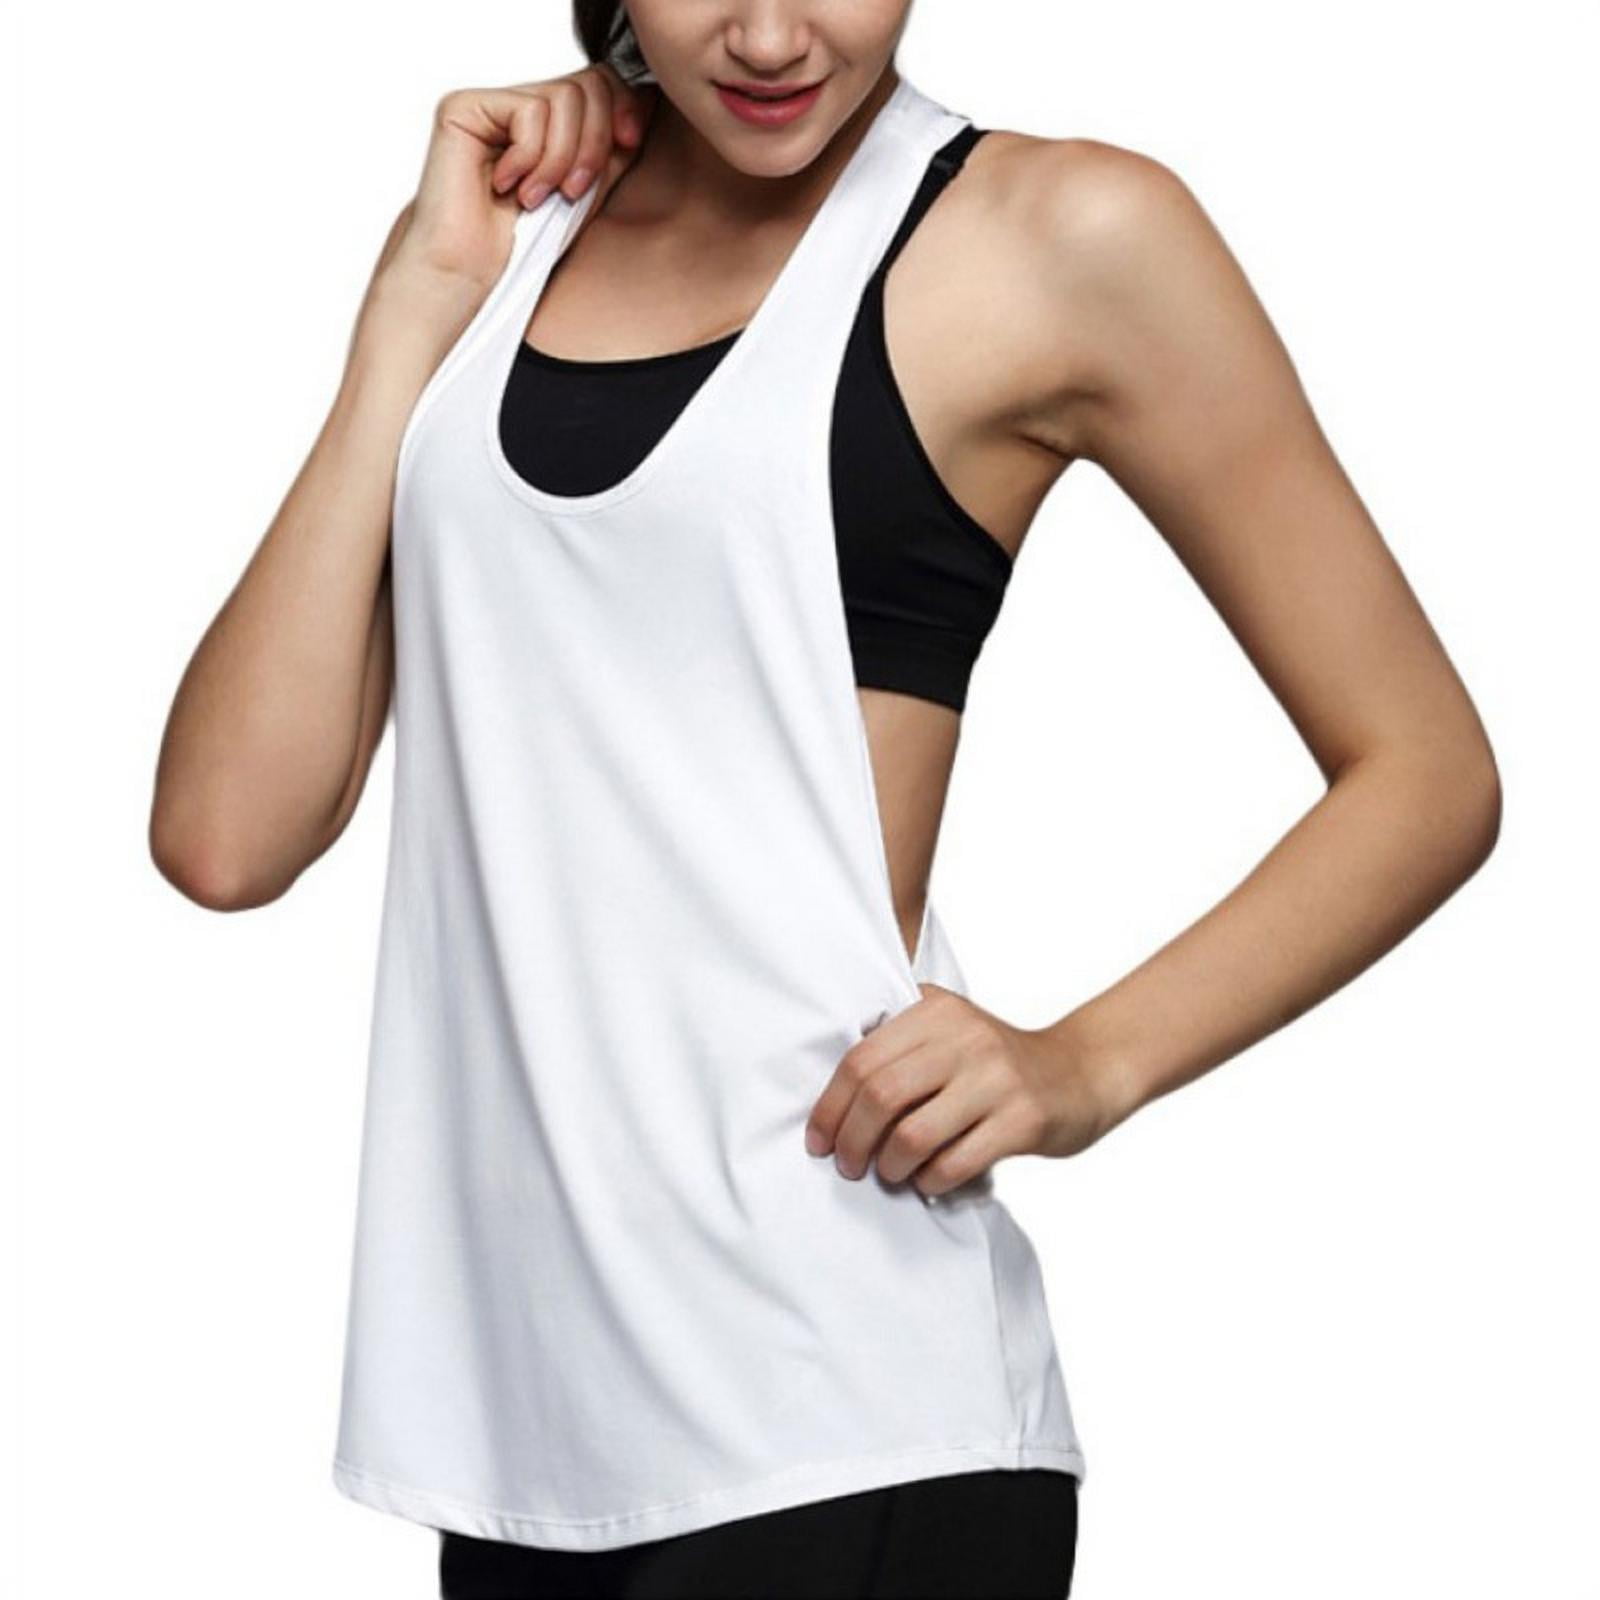 Portazai Women Tank Tops Workout Sports Shirts Backless Sleeveless Blouses Tunics Gym Exercise Athletic Yoga Tops